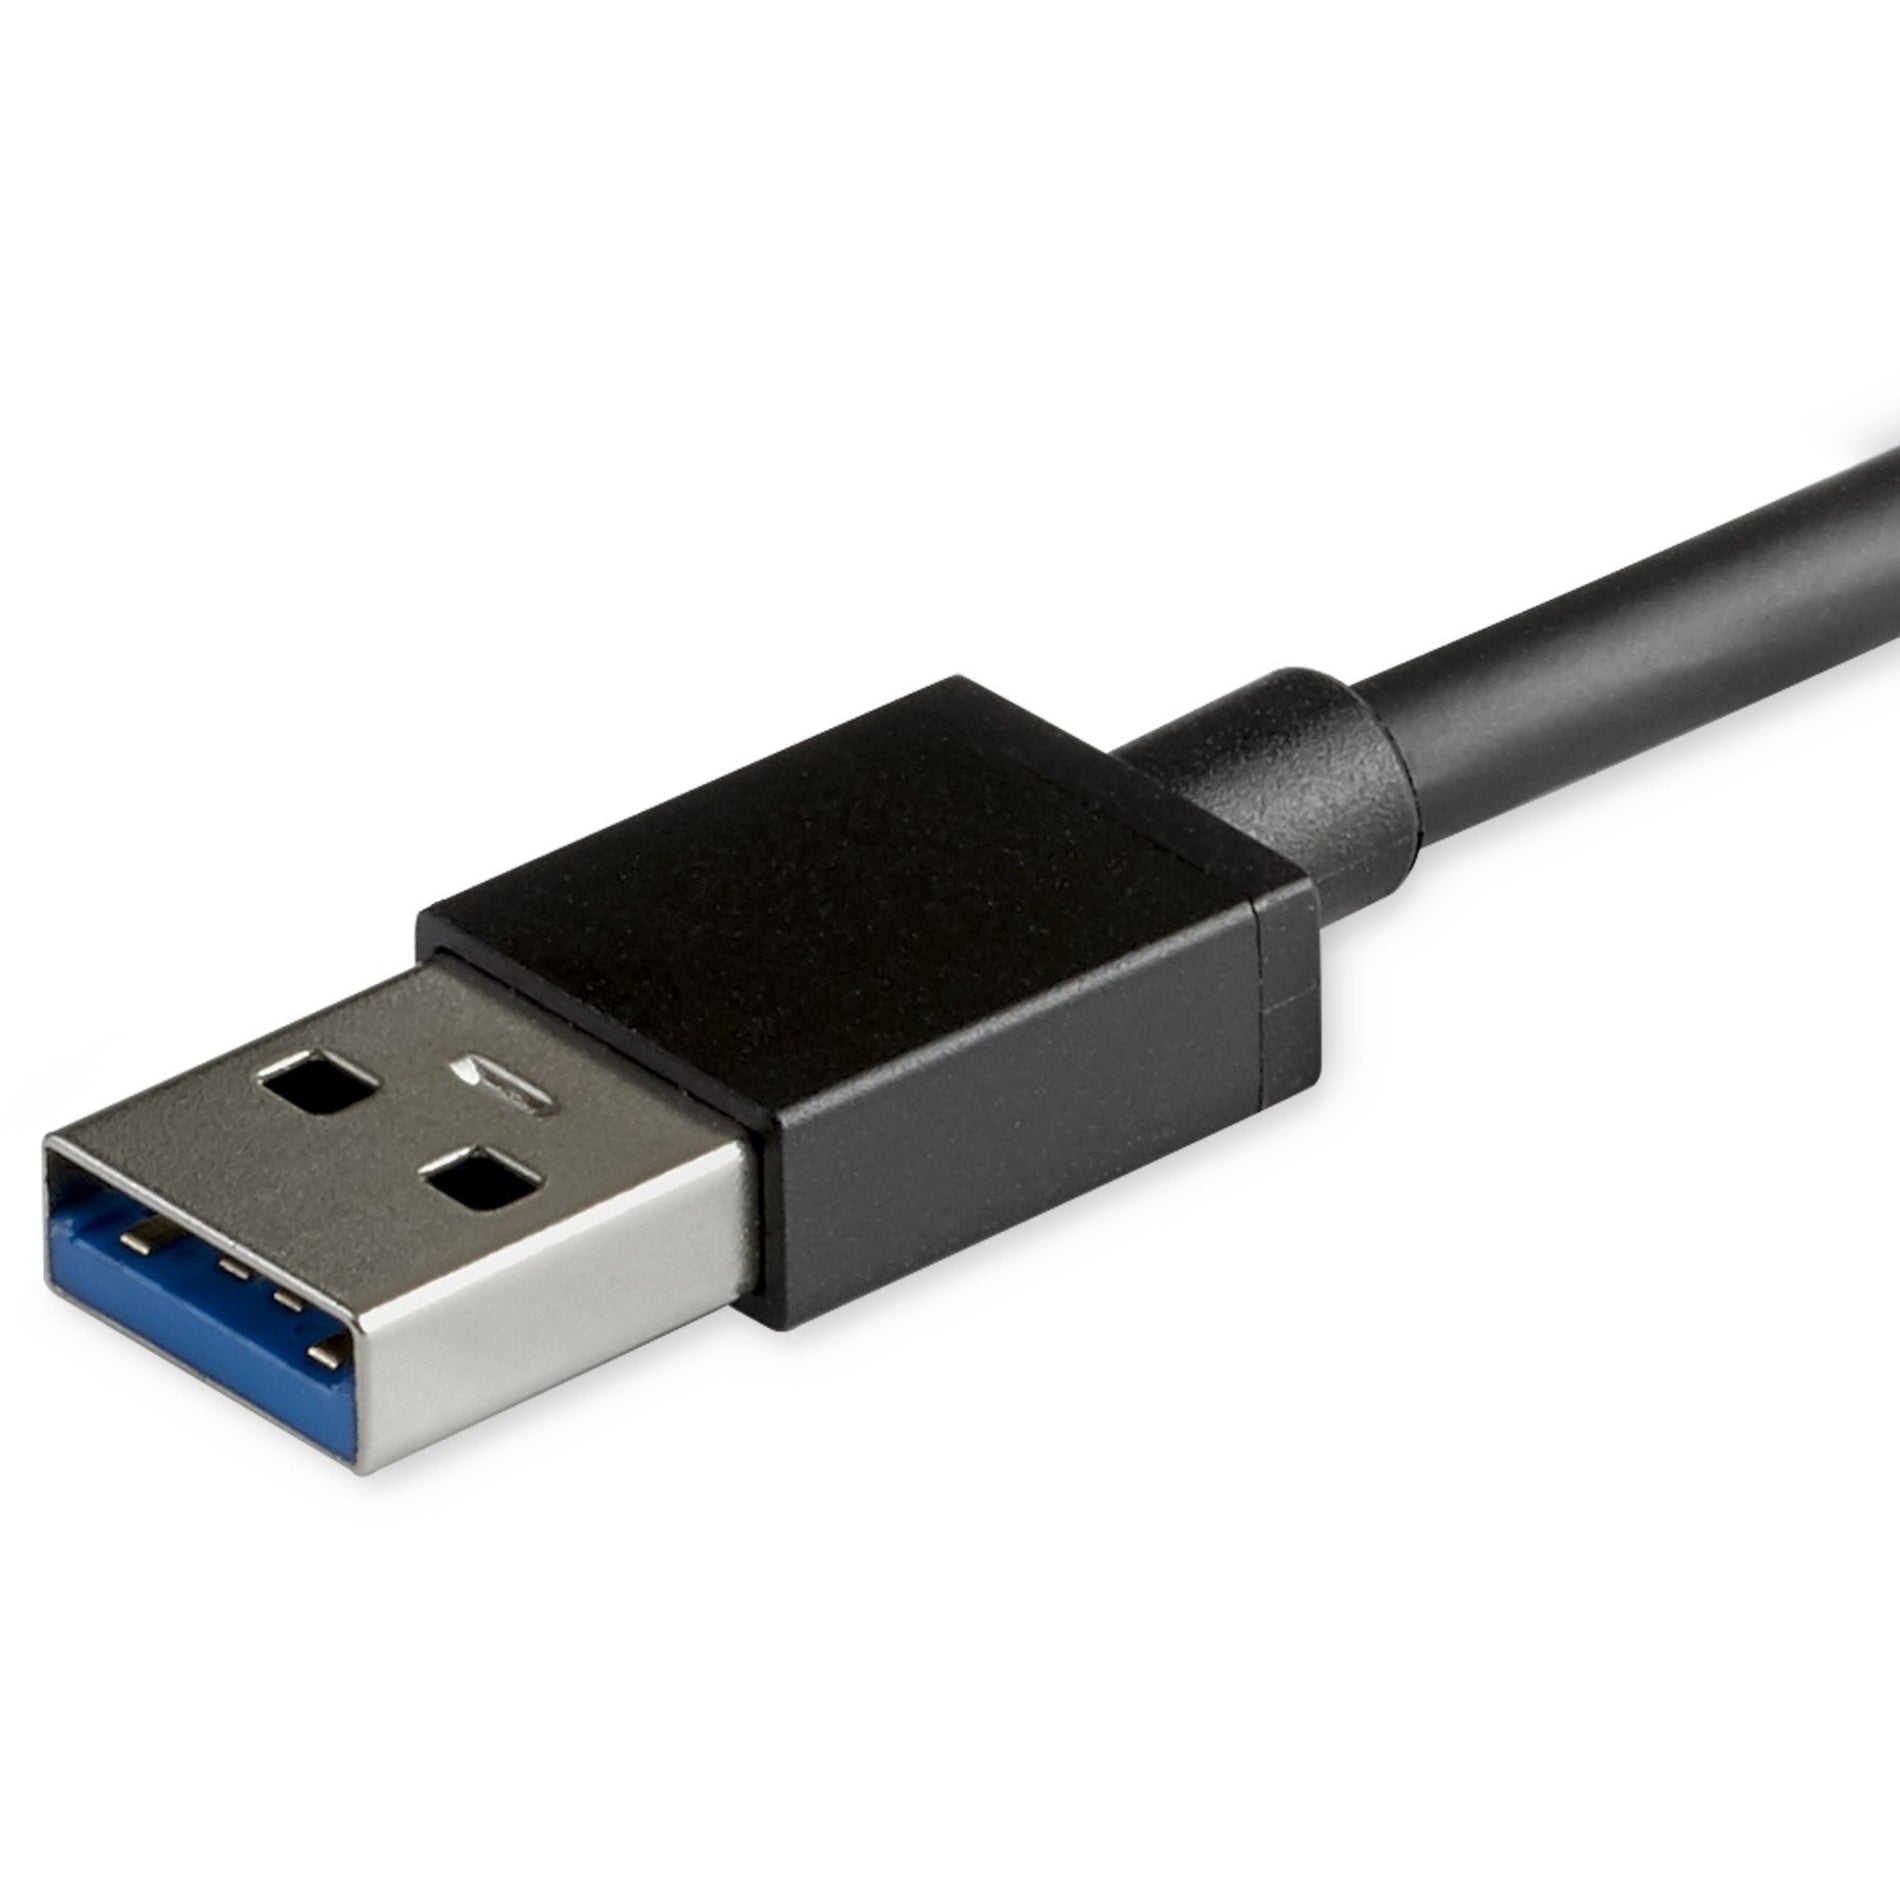 StarTech.com HB30A4AIB 4-Port USB 3.0 Hub - Portable USB 3.0 Port Expander, Individual On/Off Switches